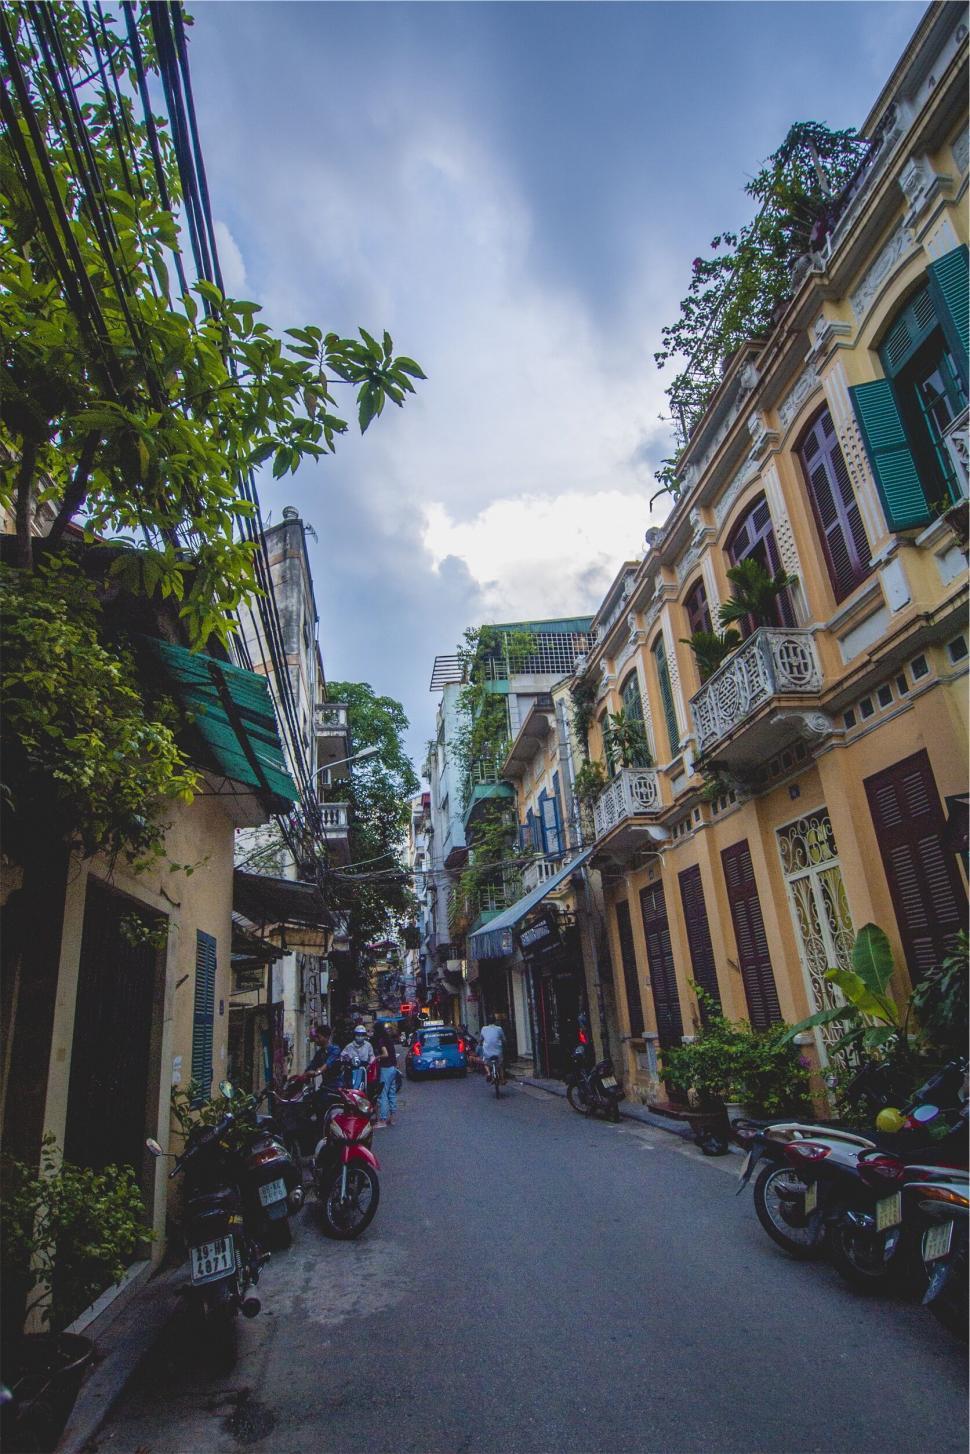 Free Image of Bustling narrow street in Vietnamese town 